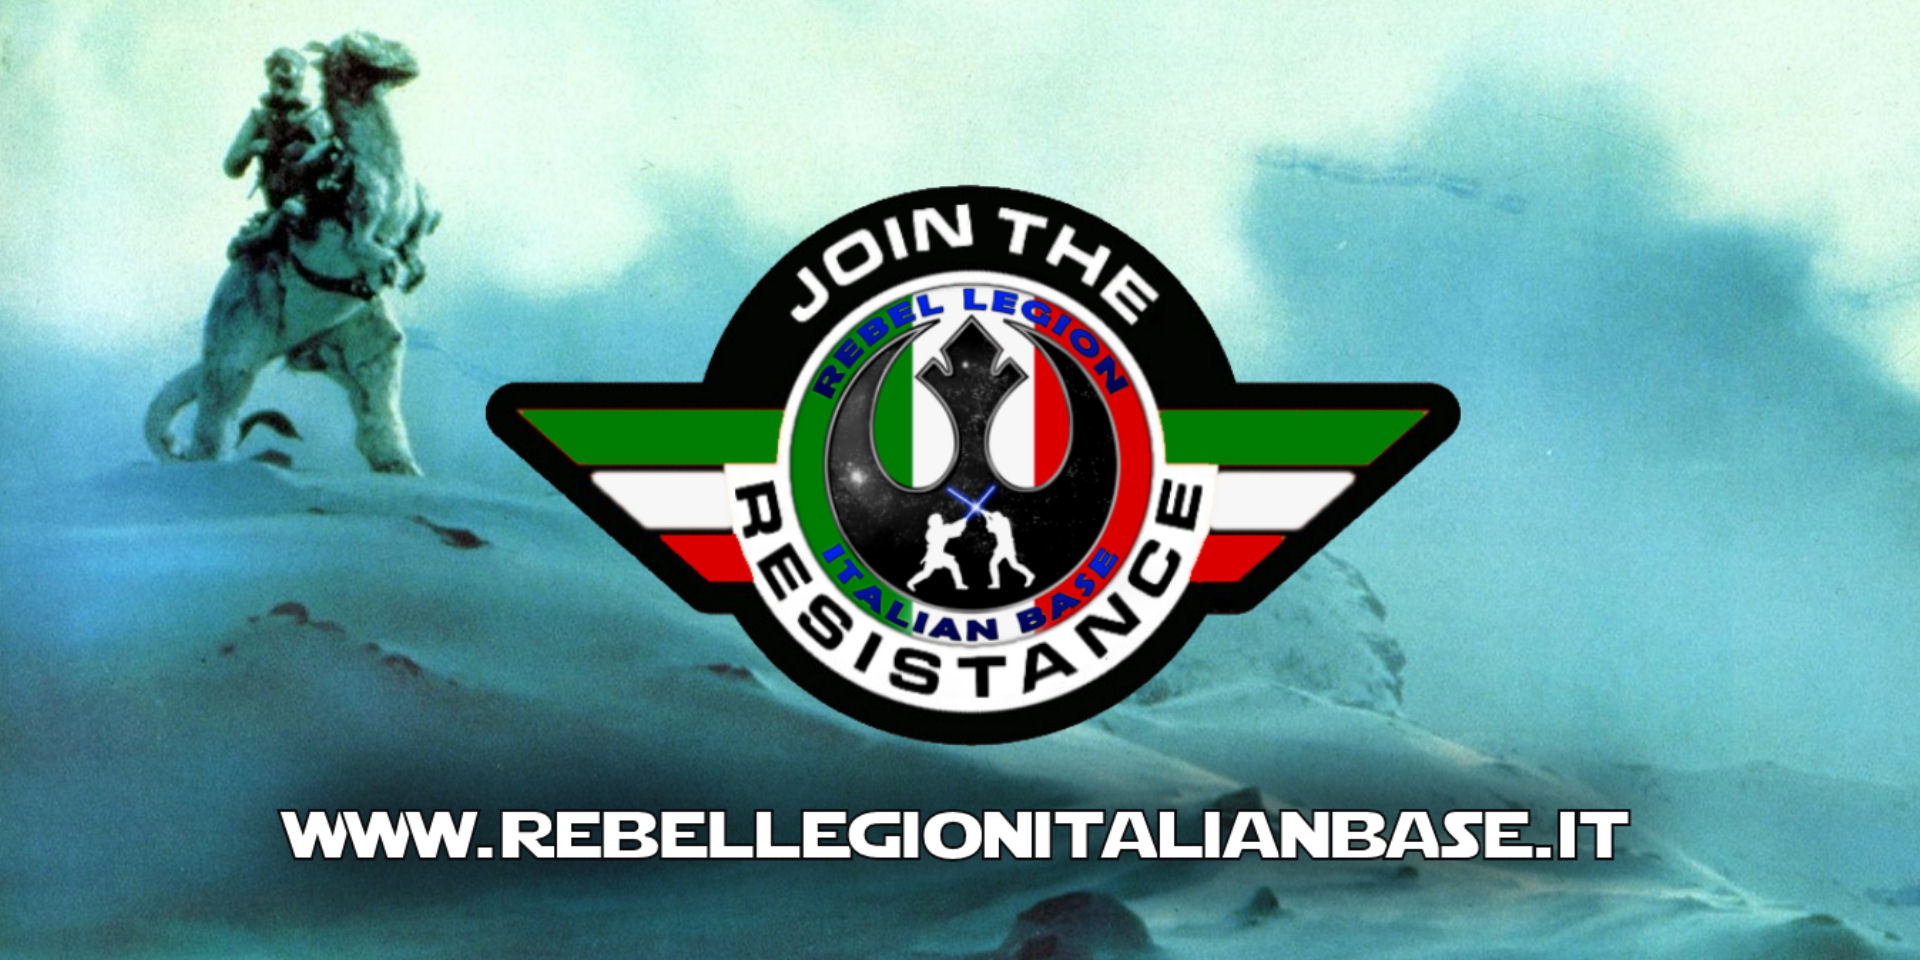 (c) Rebellegionitalianbase.it